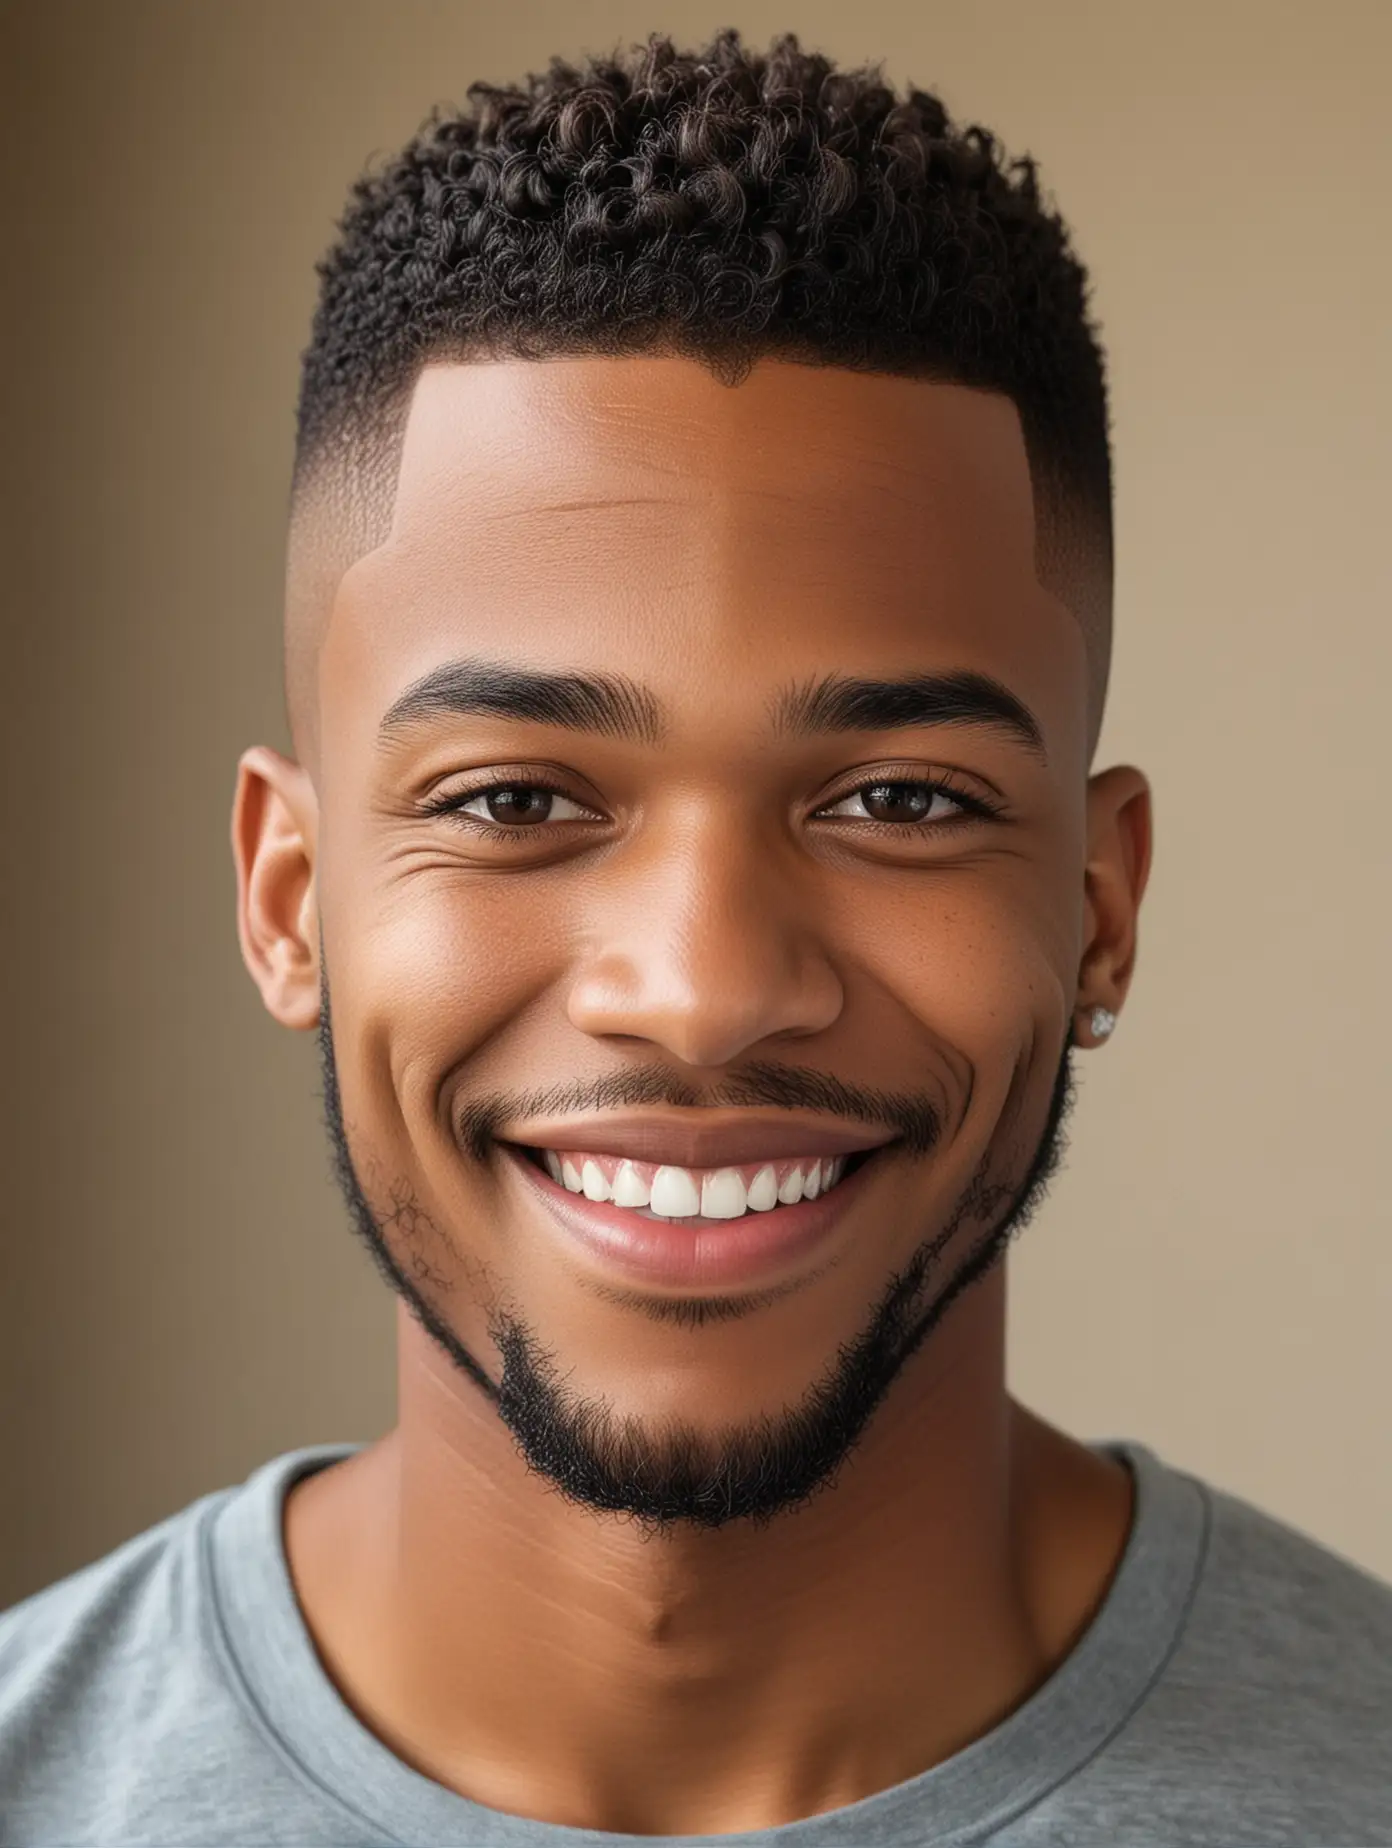 African American Man with Stylish Fade Haircut Smiling Joyfully